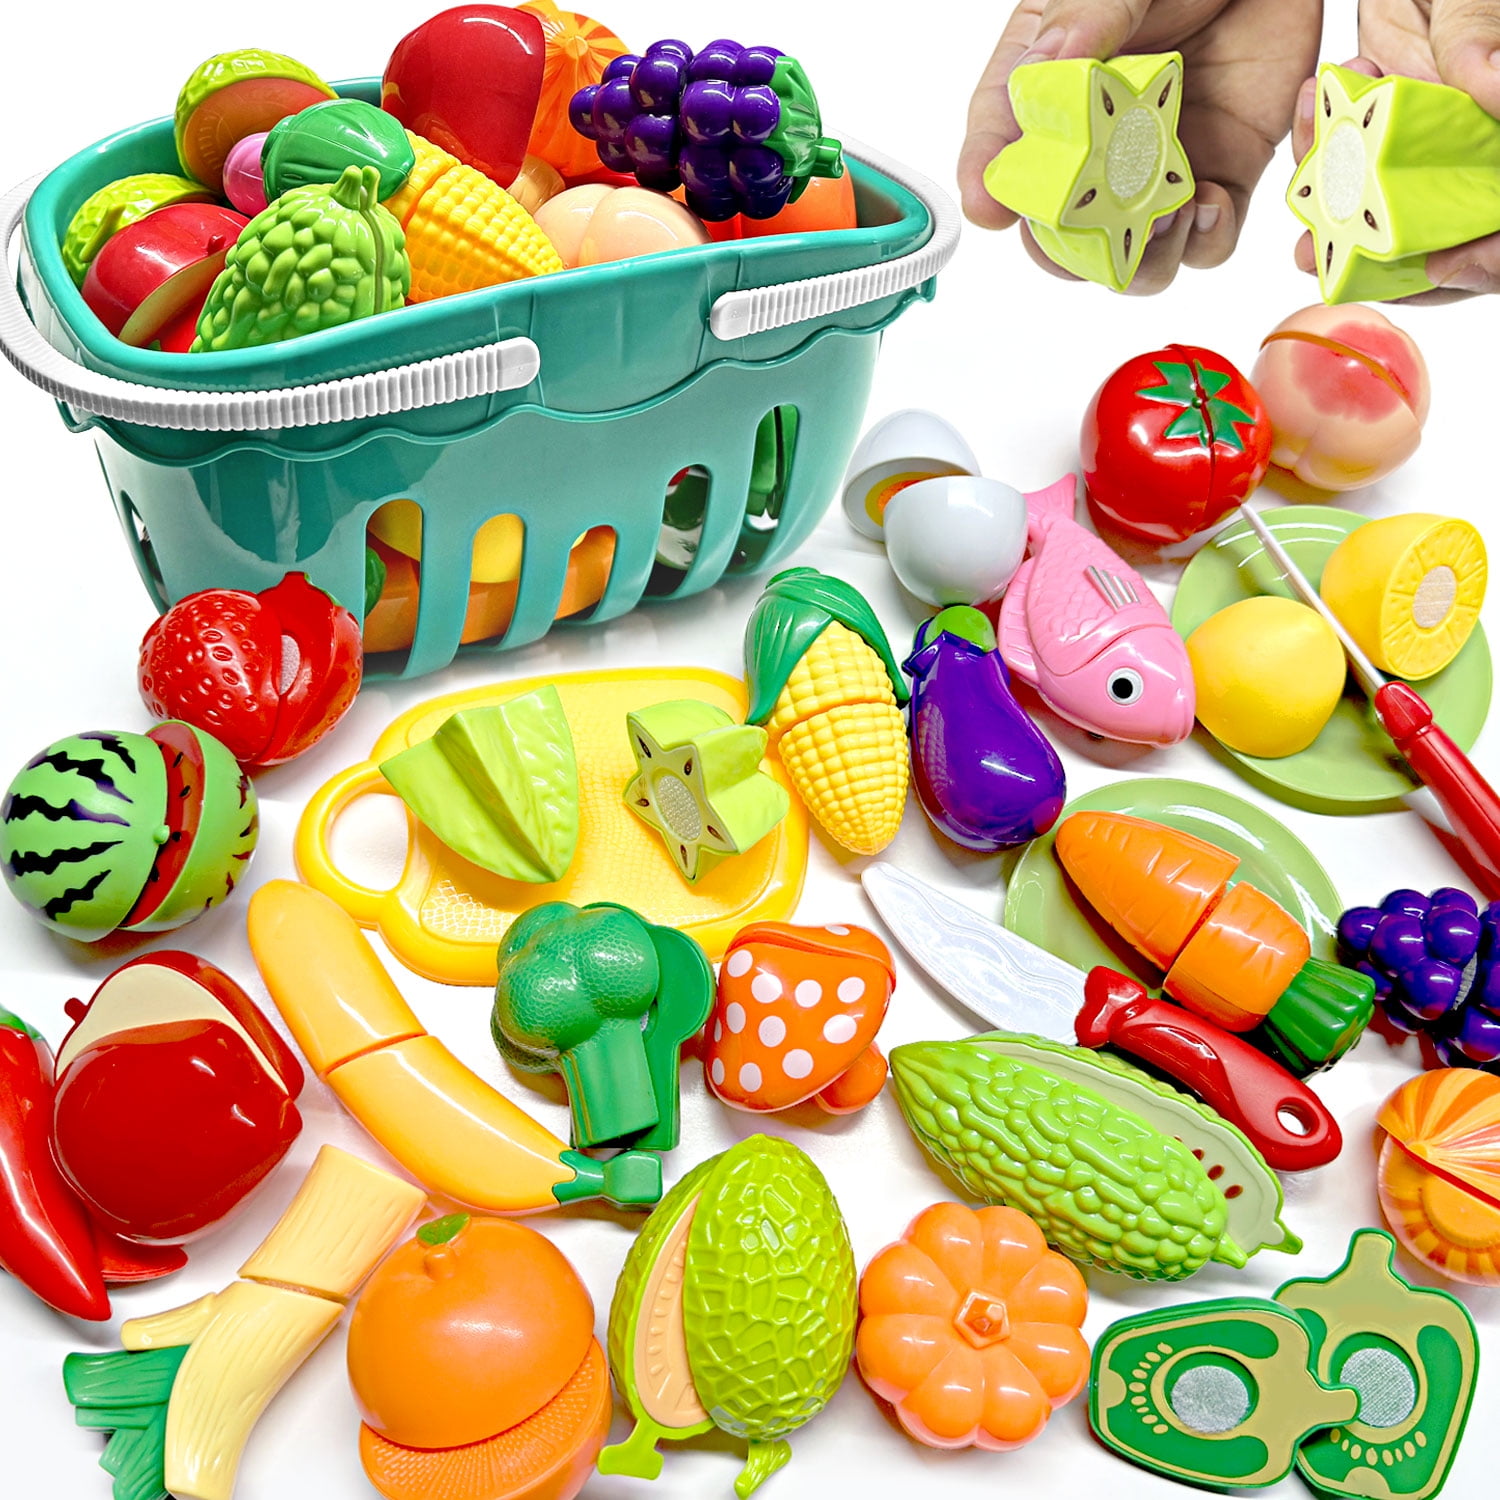 Kid Odyssey 30pcs Cutting Play Food Set Toy for Kids Kitchen, Pretend ...